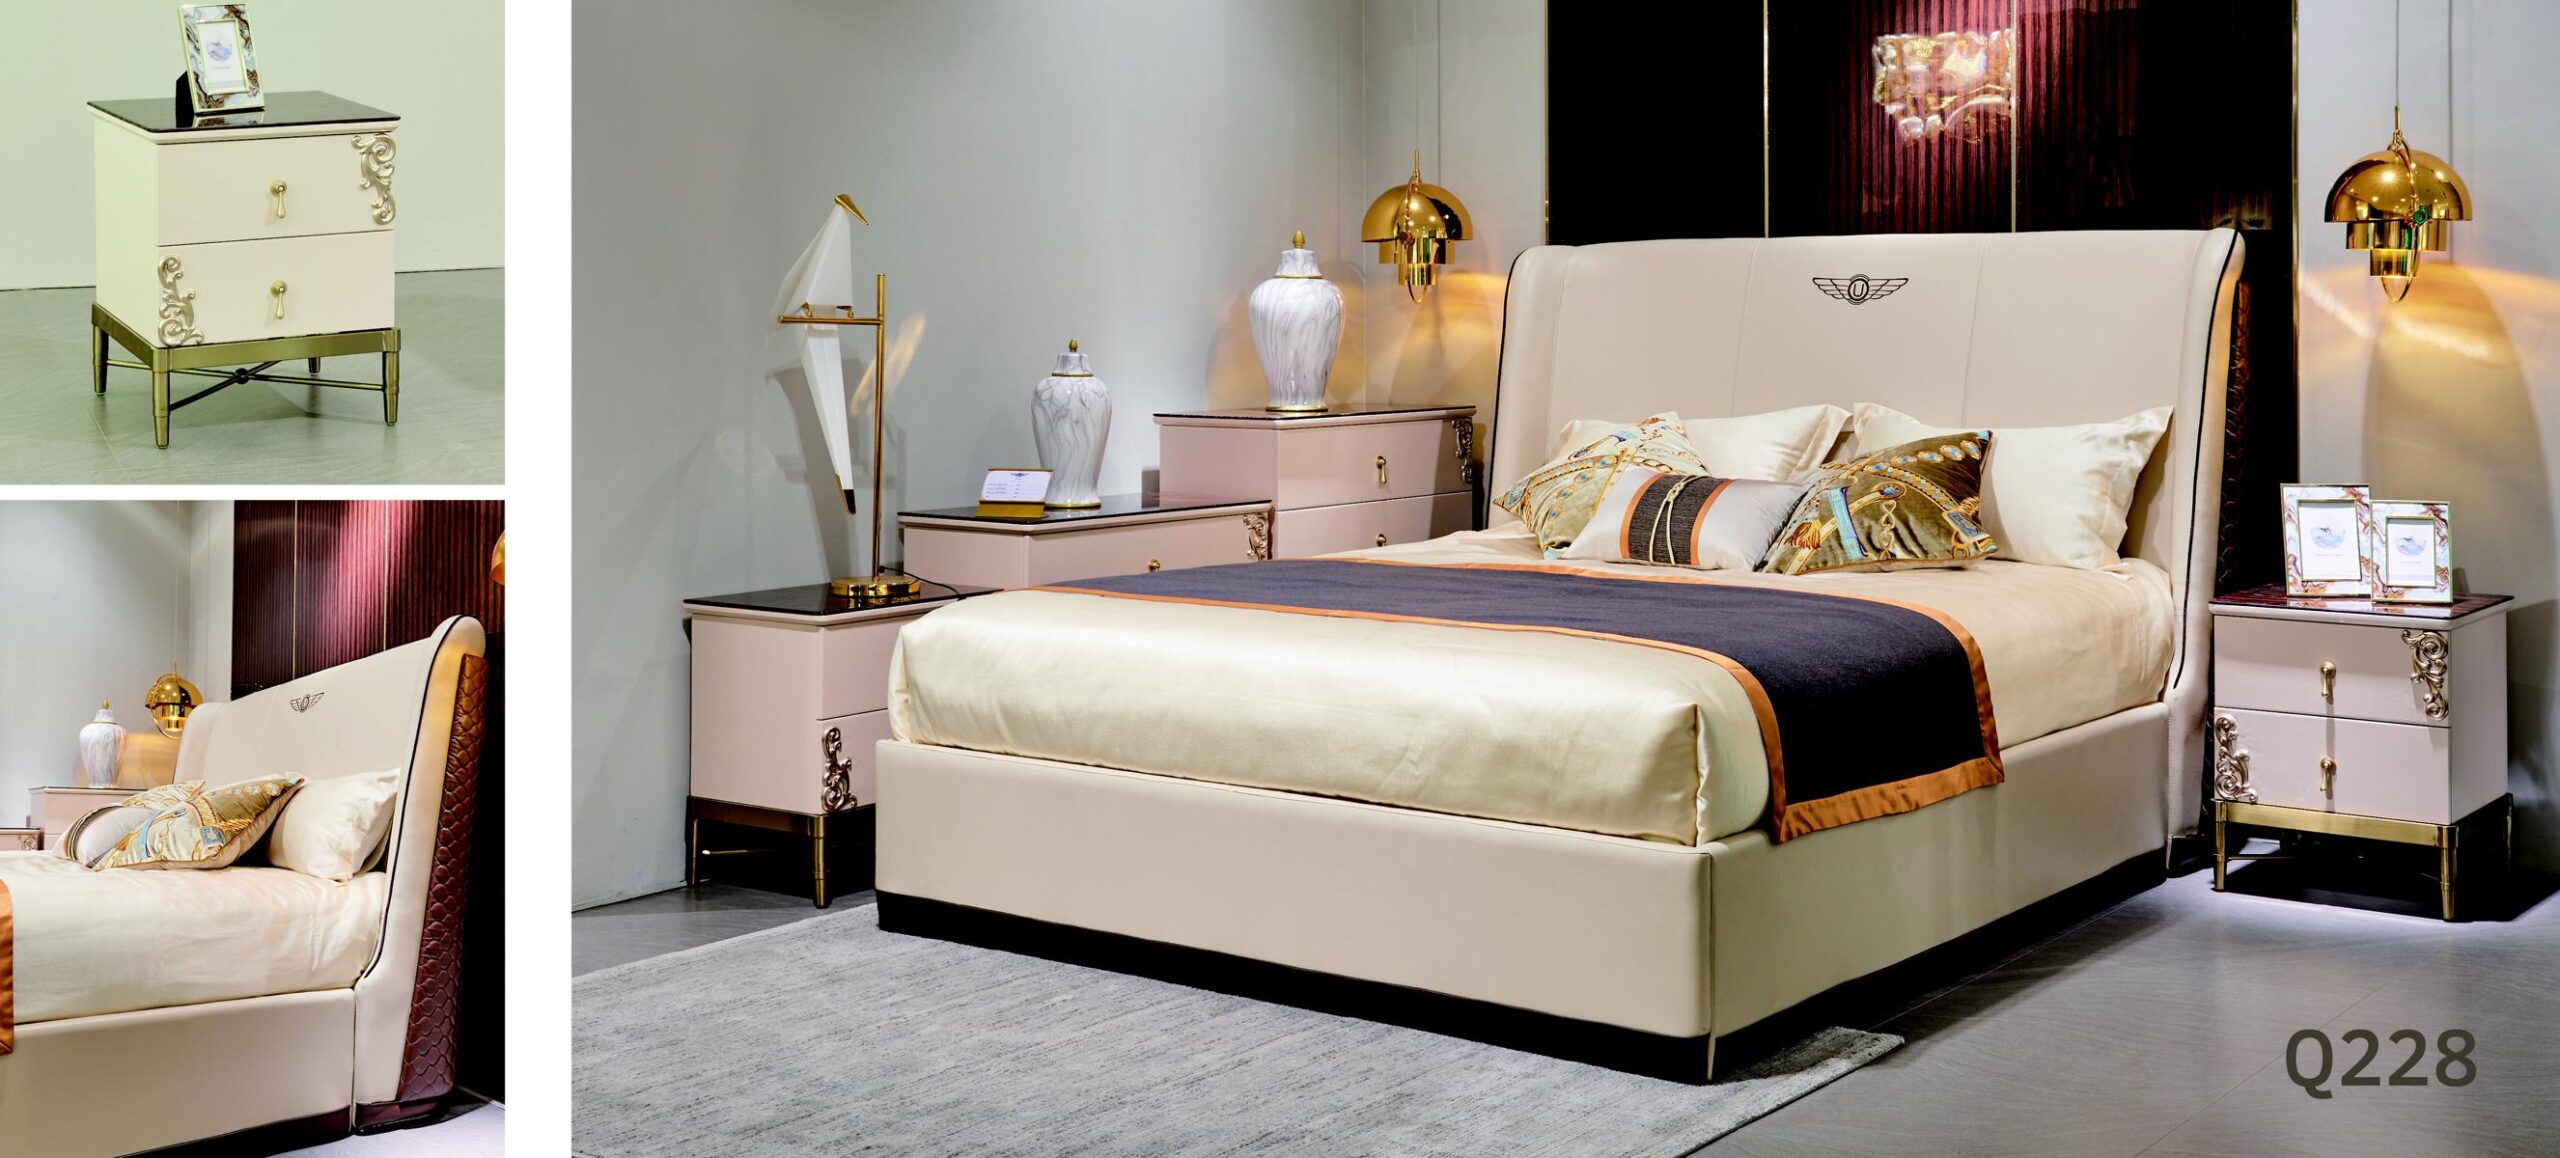 Schlafzimmer Set Betten Luxus Bett 2x nachttisch 3 stücke 180×200 Bett